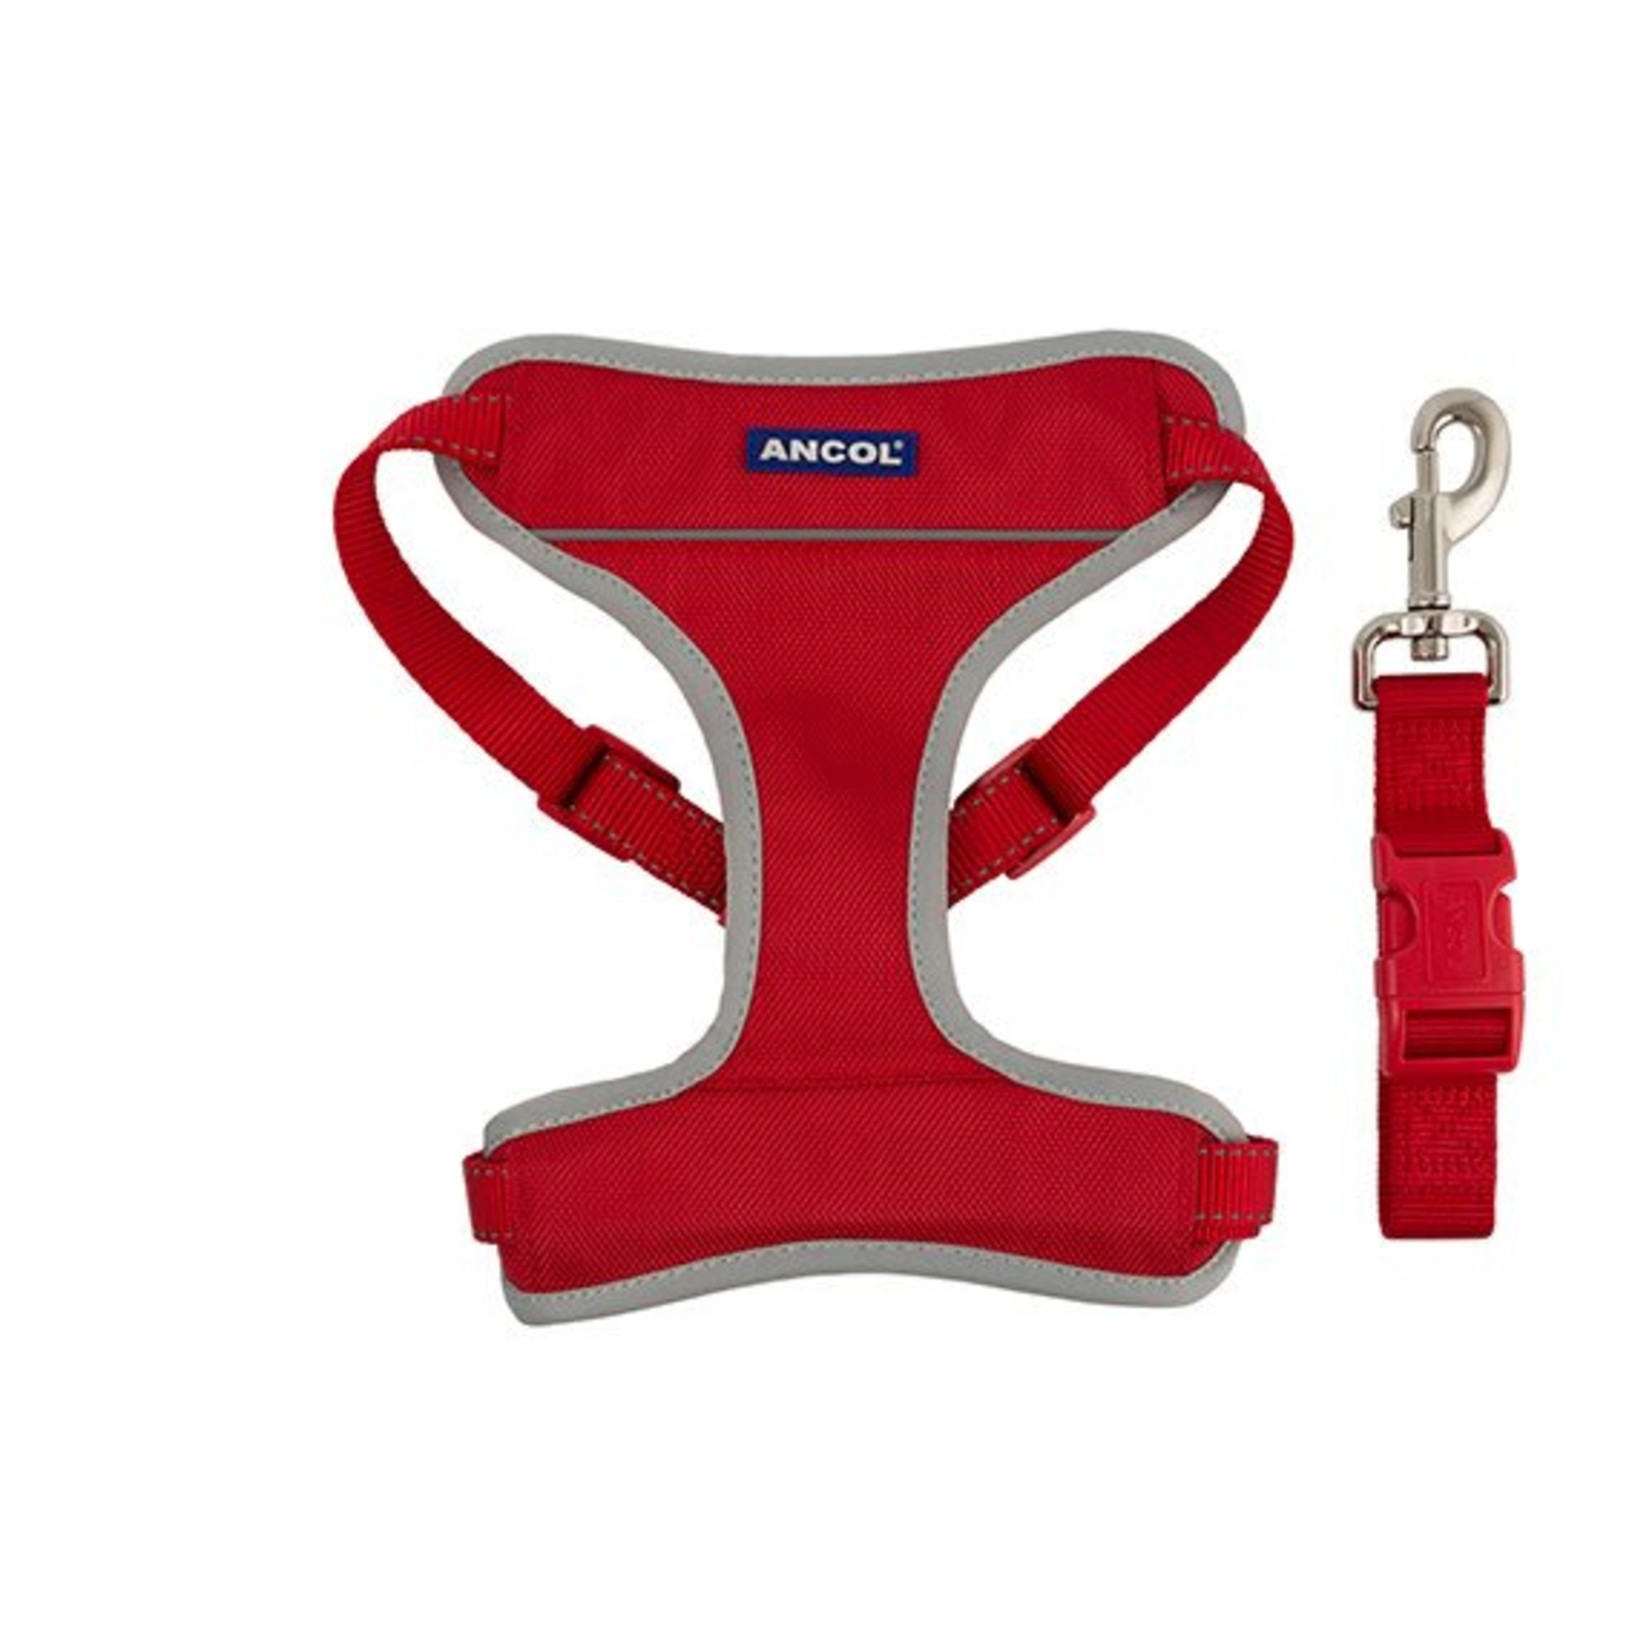 Ancol Nylon Travel Dog Harness, Red